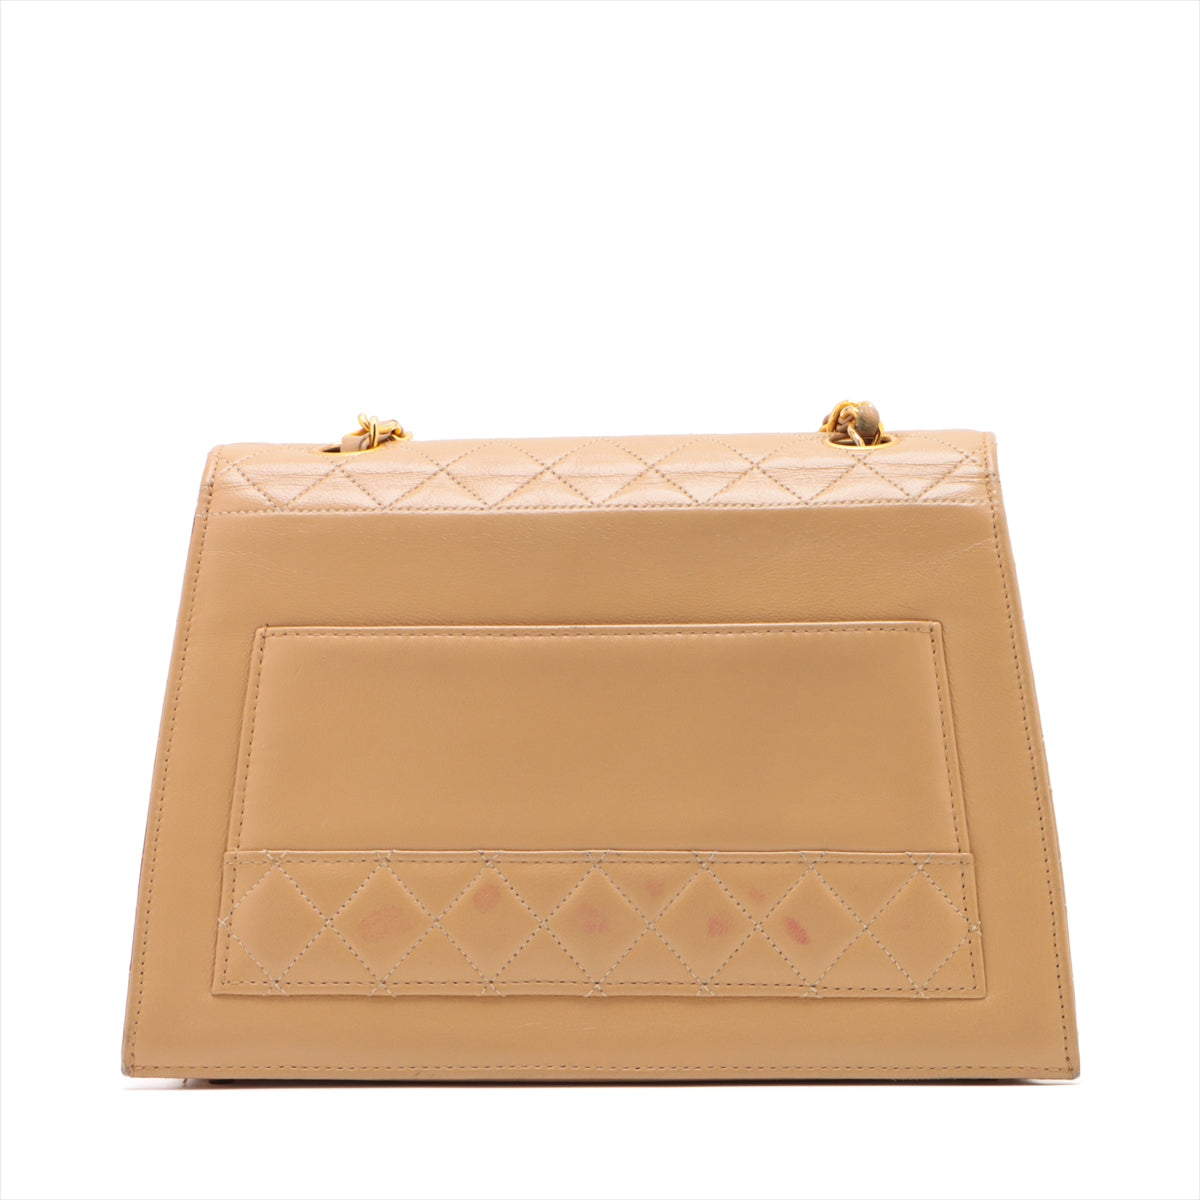 Chanel Matrasse  Single Flap Single Chain Bag Beige G  1st Turn-Lock